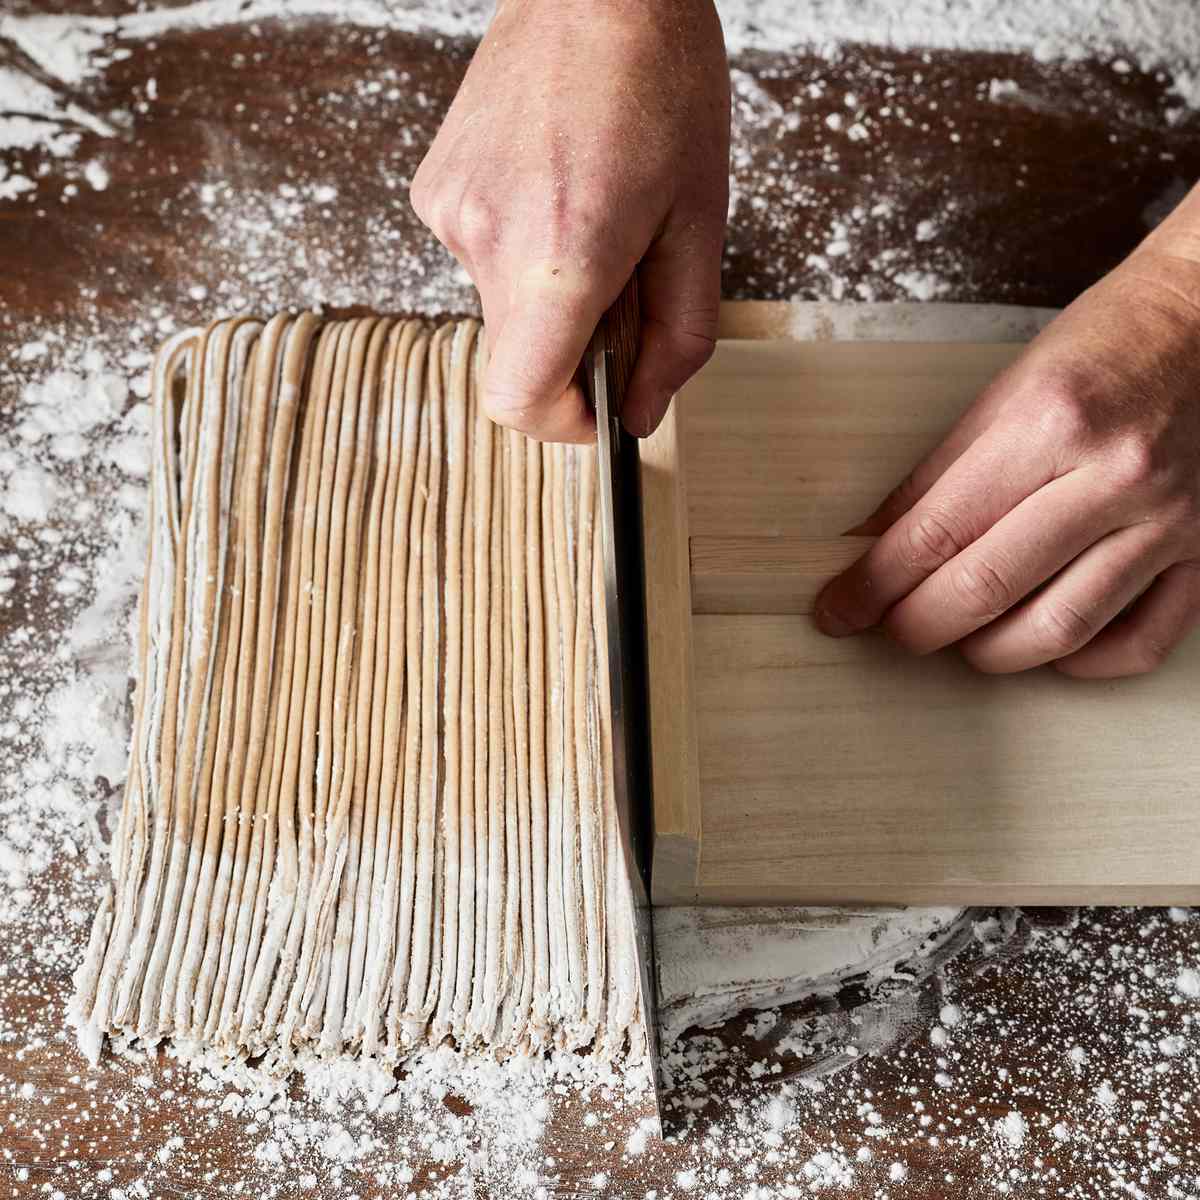 How to Make Homemade Soba Noodles